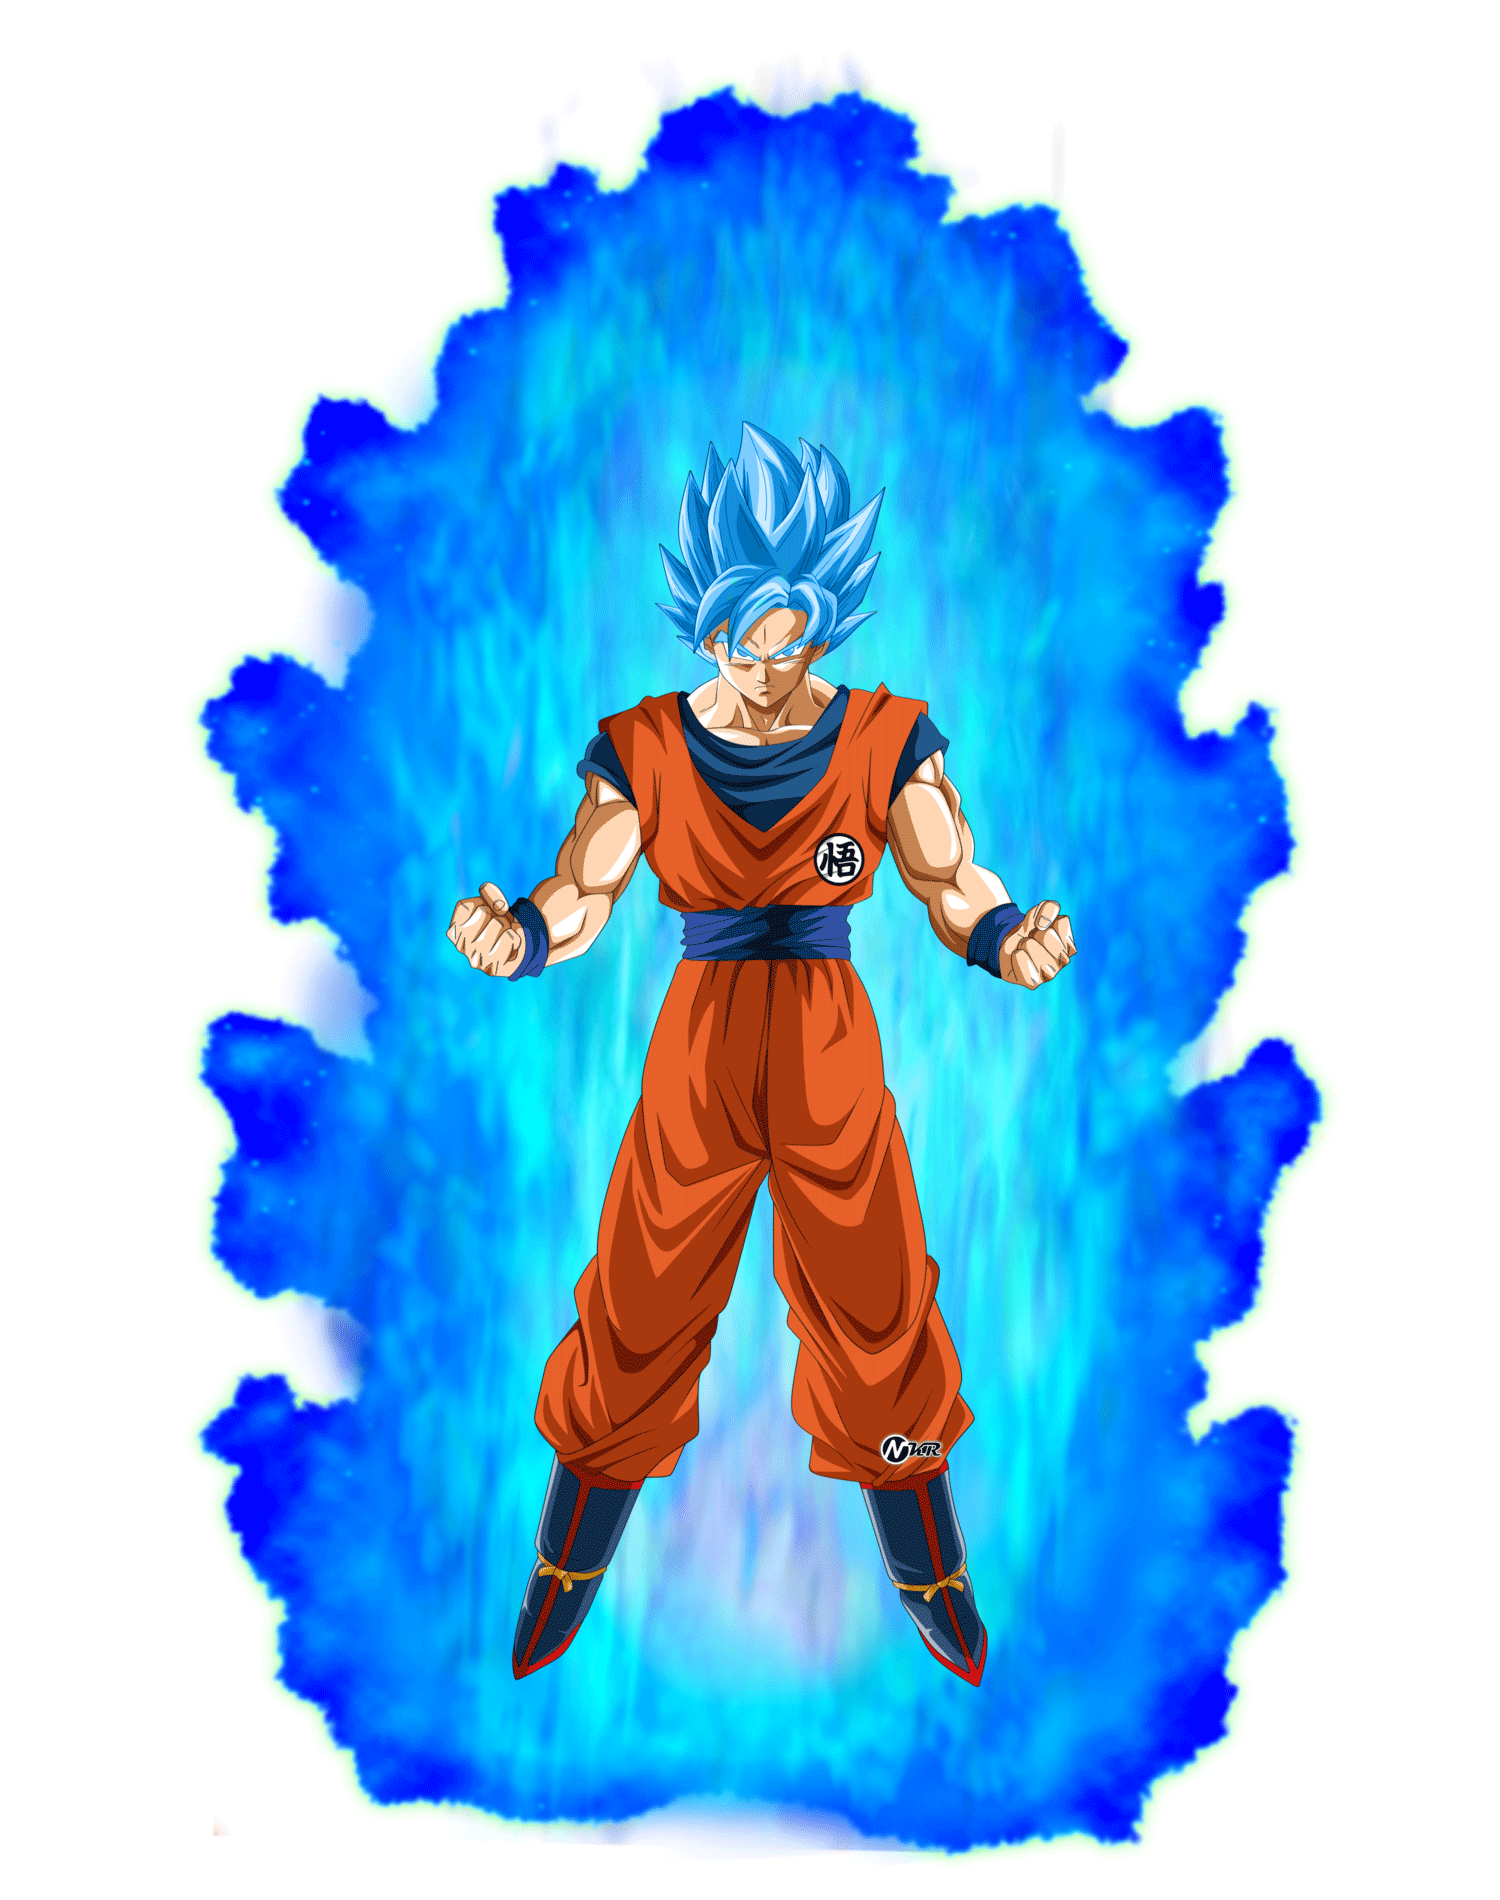 Goku ssj blue evolution by Erick101 on DeviantArt, goku ssj blue